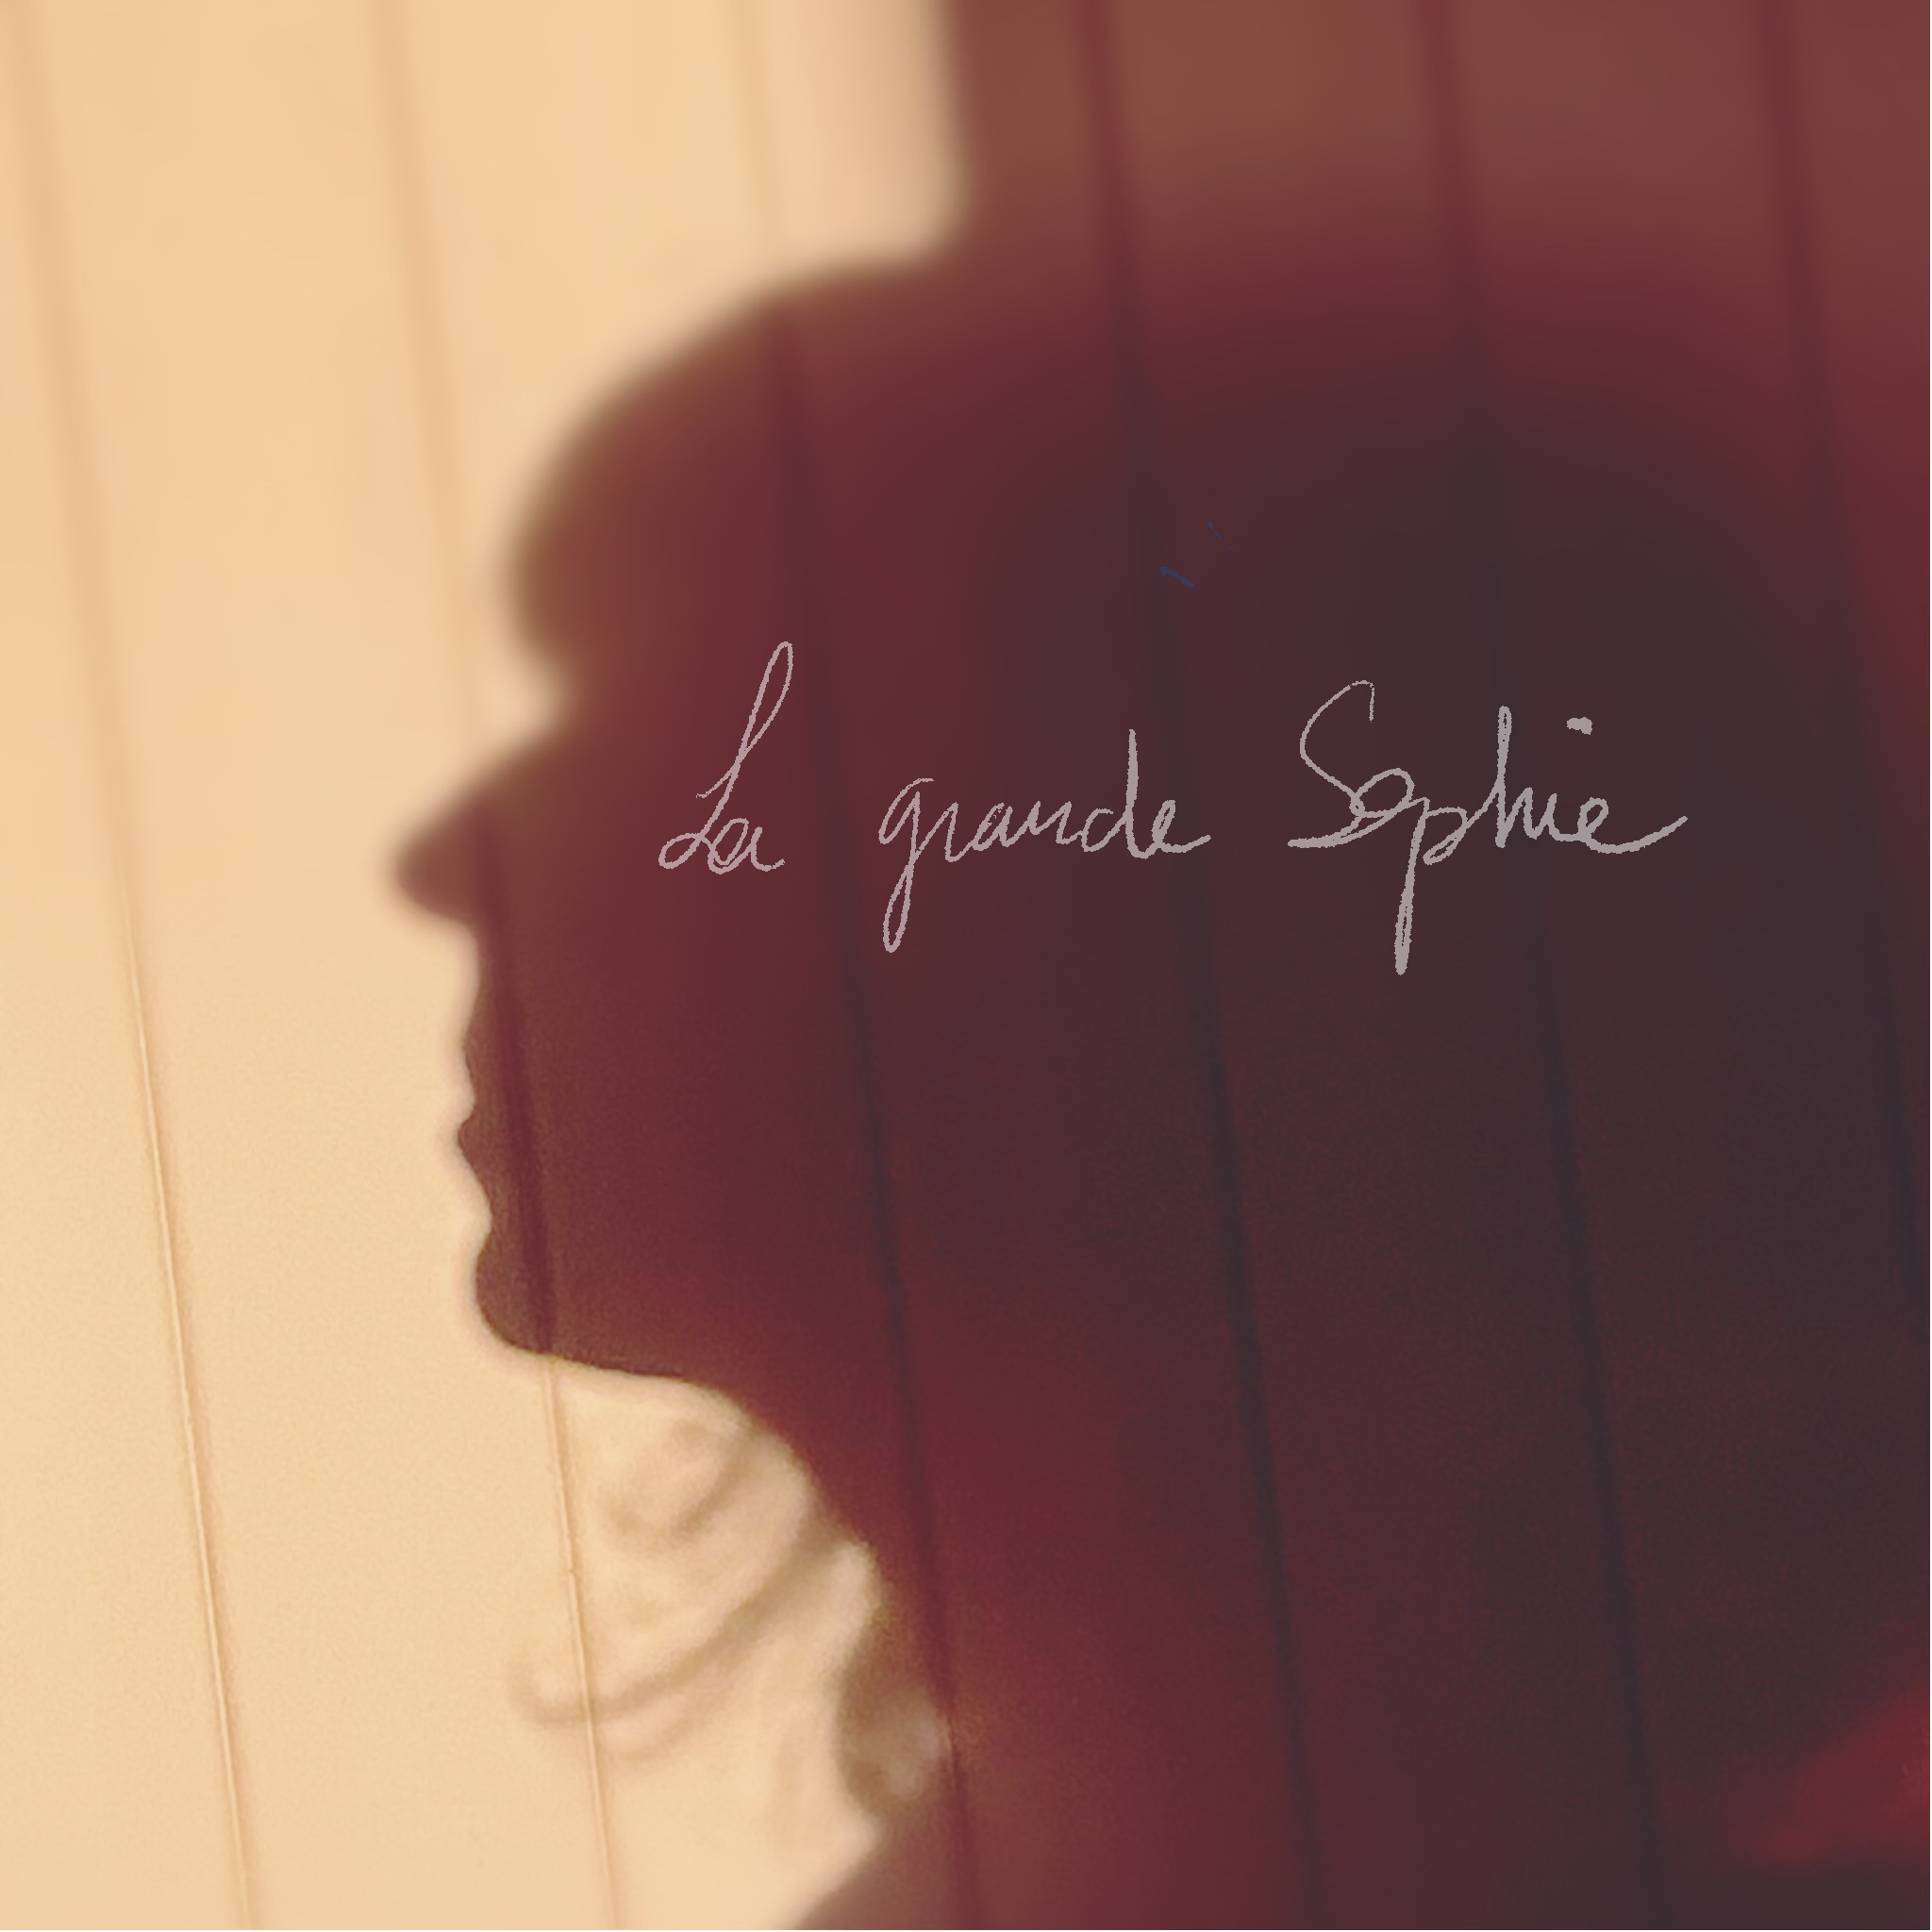 Featured image for “LA GRANDE SOPHIE”